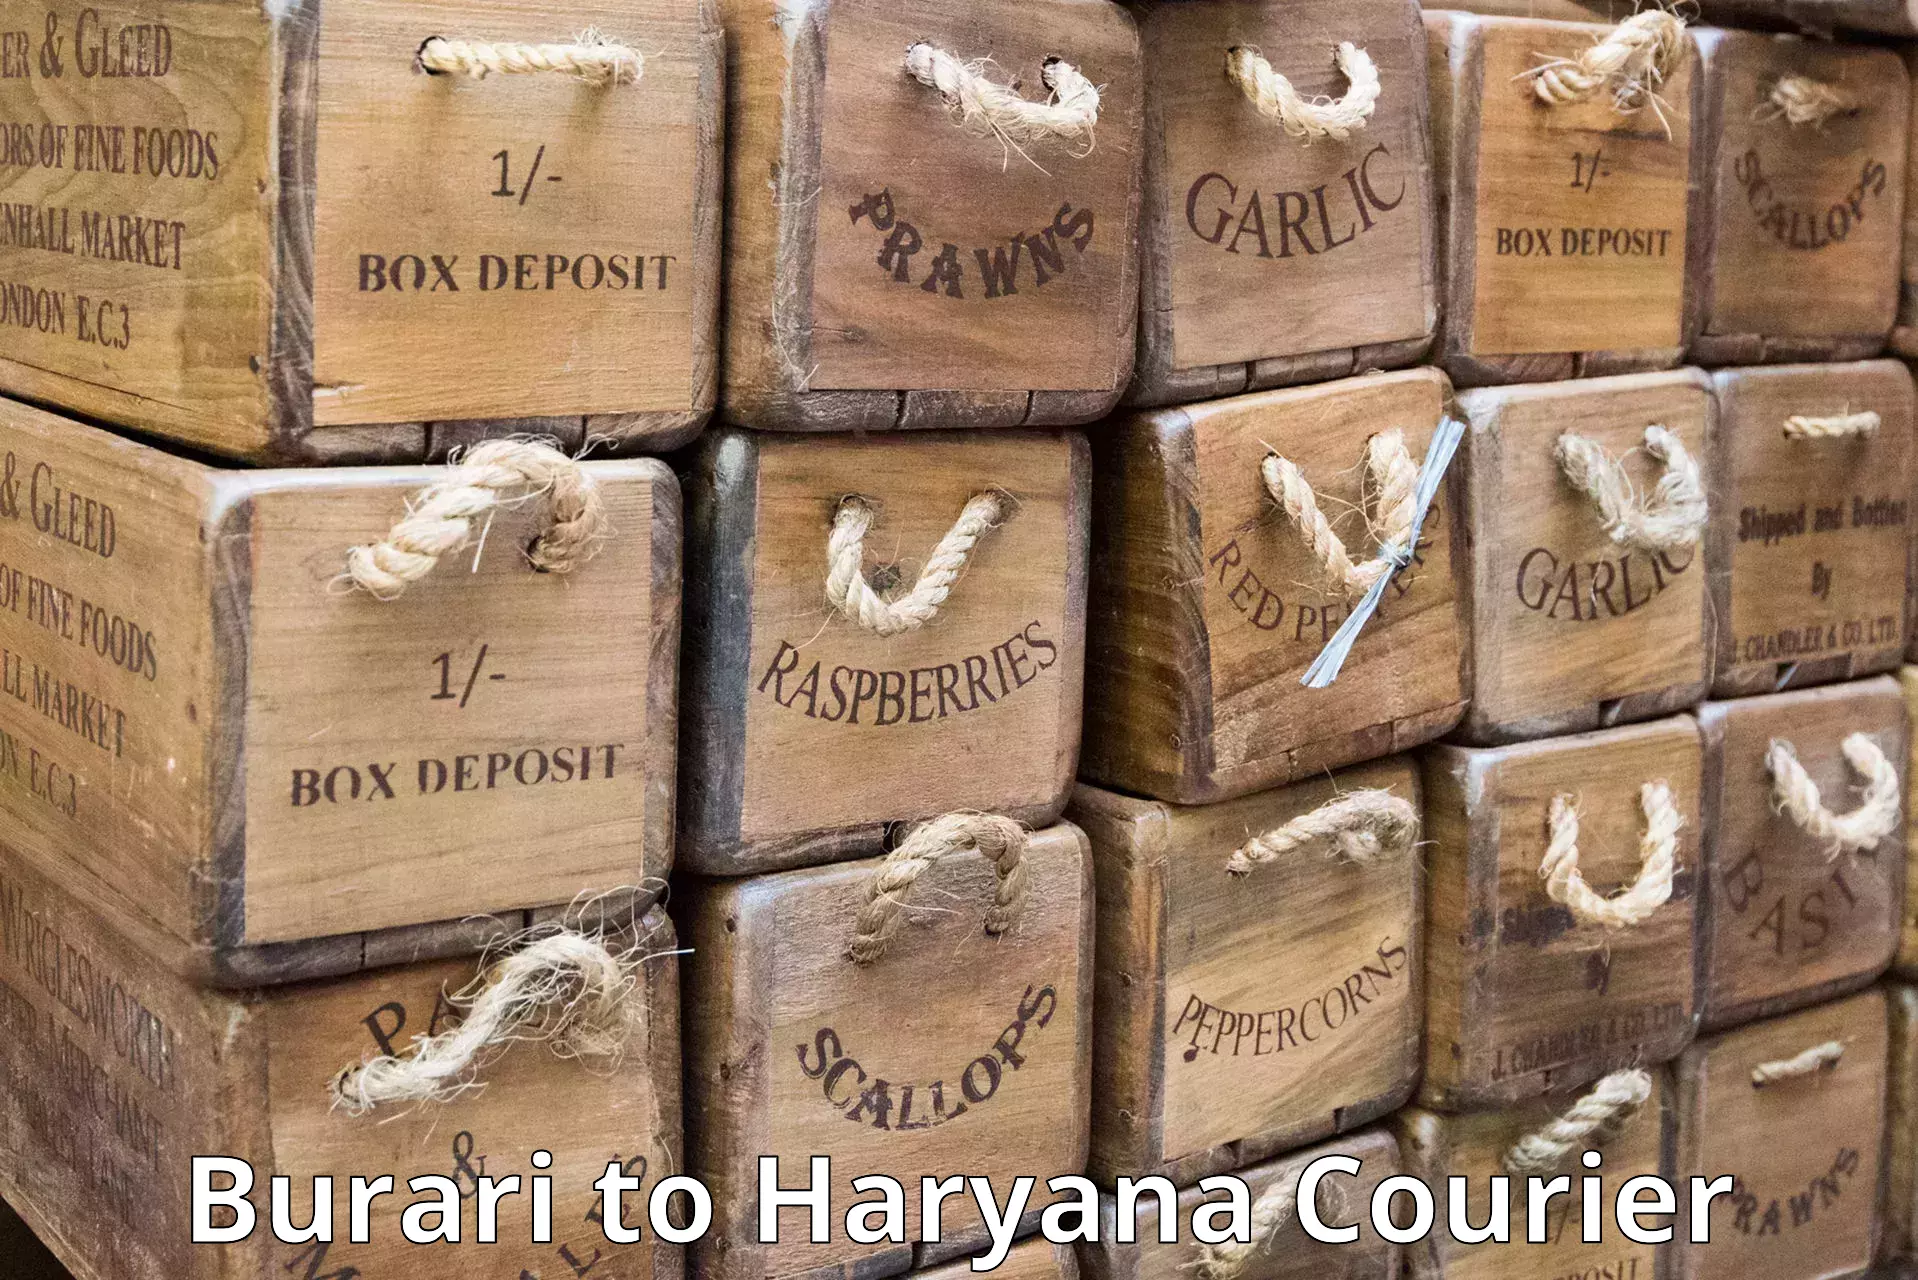 Courier service comparison Burari to Naraingarh